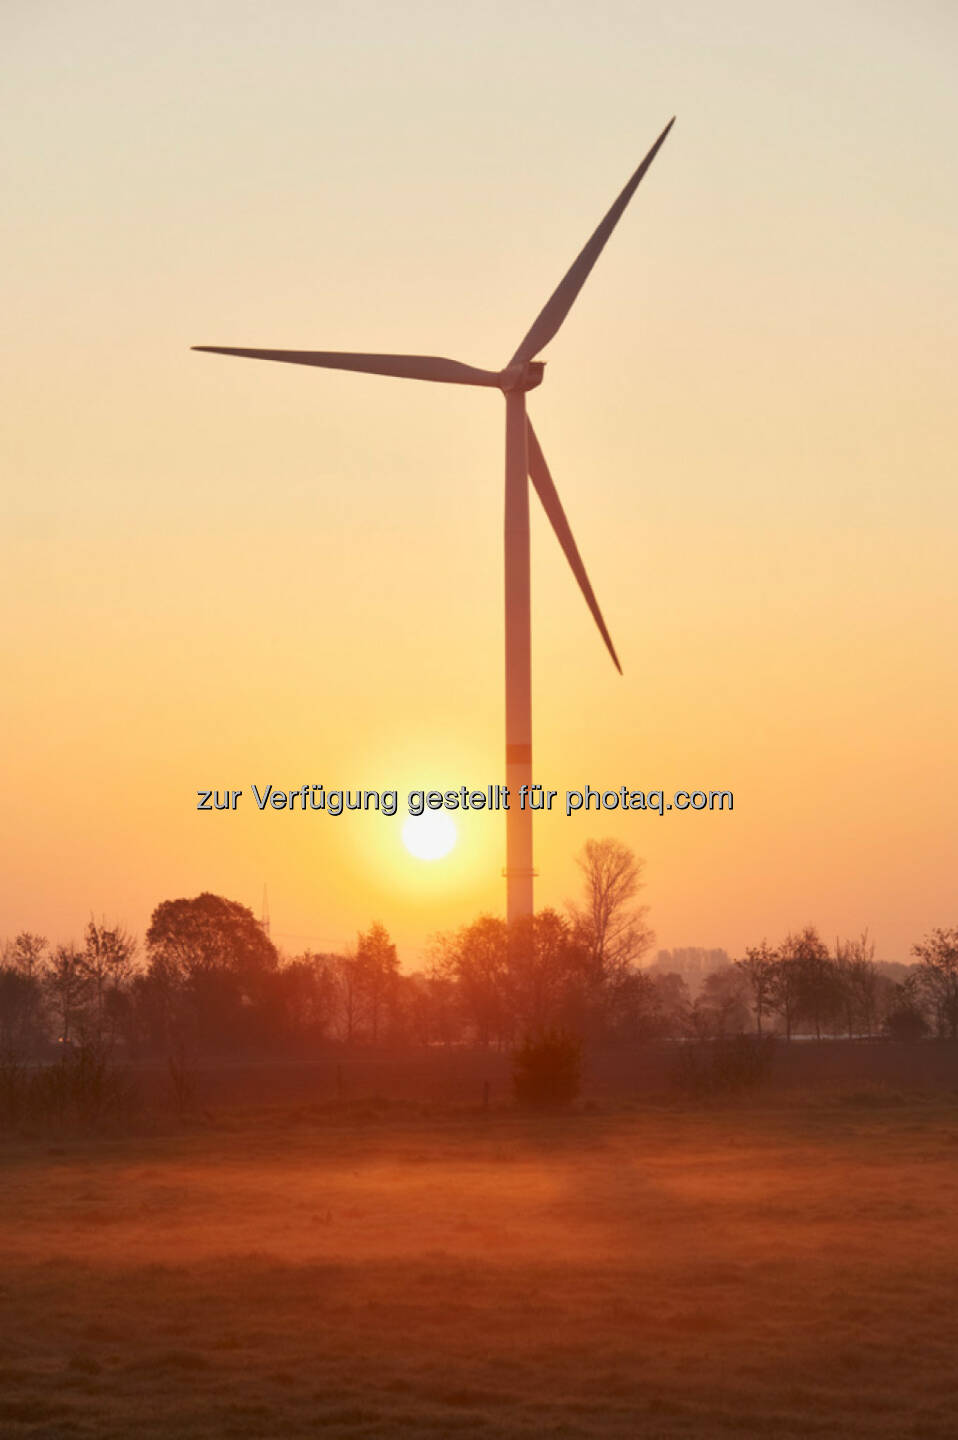 Nordex N100 gamma im Windpark Wiemersdorf in Schleswig-Holstein. (c) Foto: Jan Oelker / Nordex, jan.oelker@gmx.de